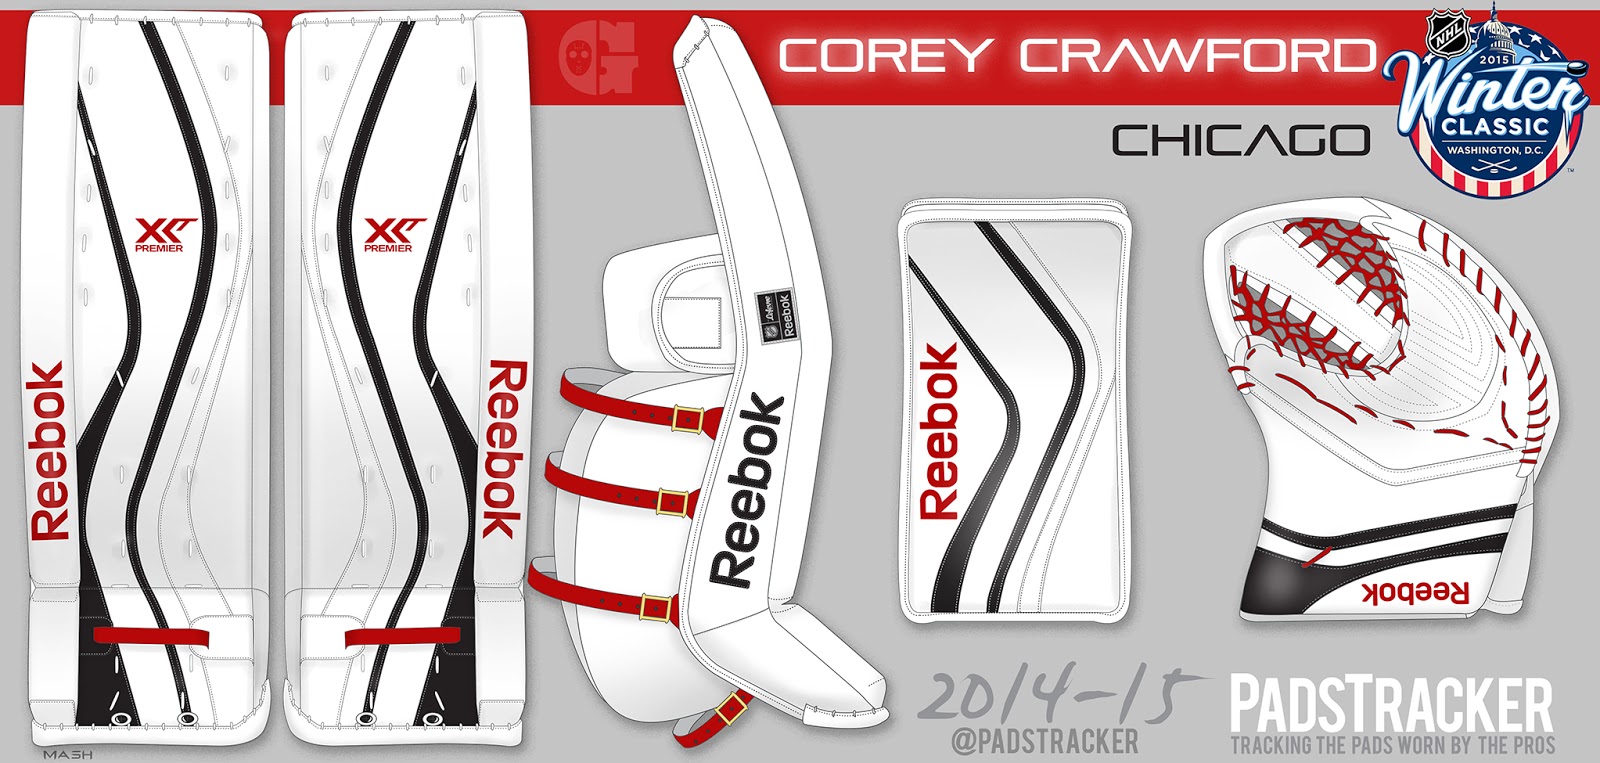 I Love Goalies!: Corey Crawford 2014-15 Mask